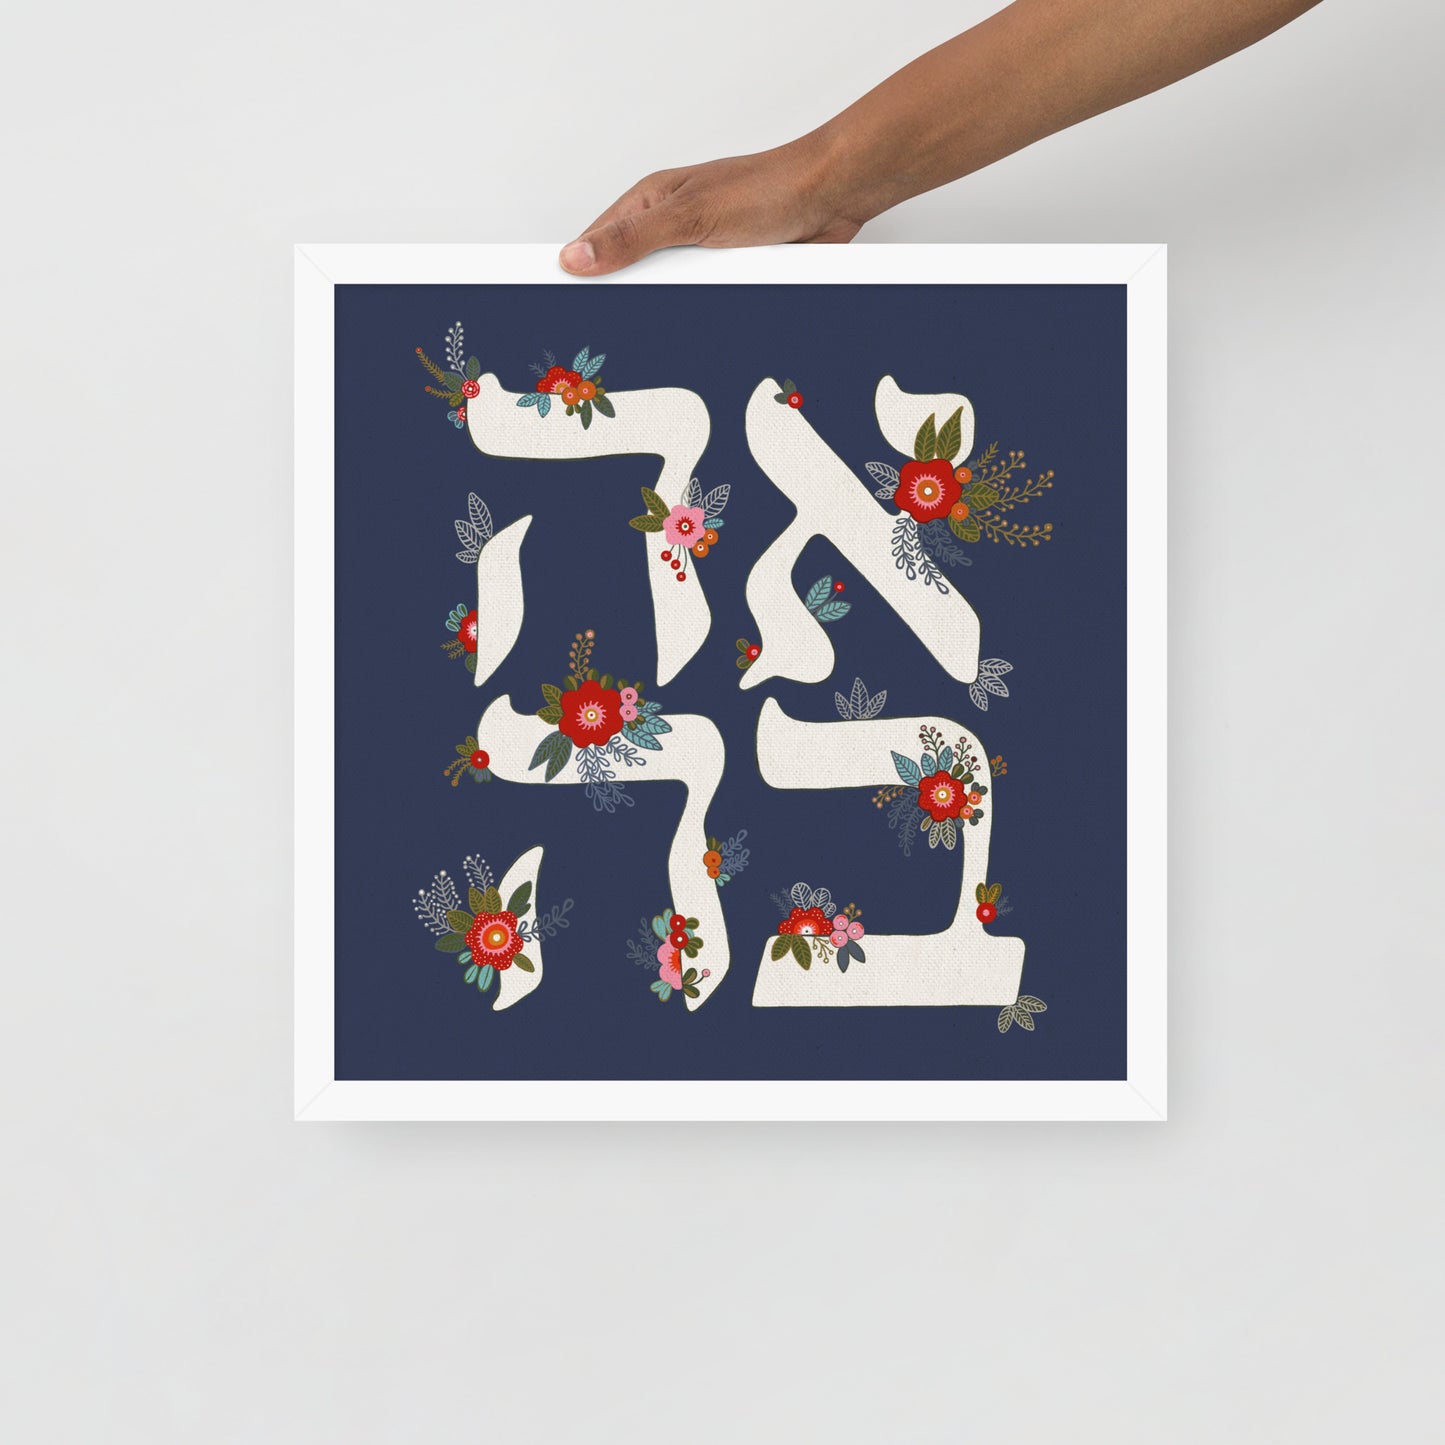 Framed Ahava (Love) Floral Hebrew Art